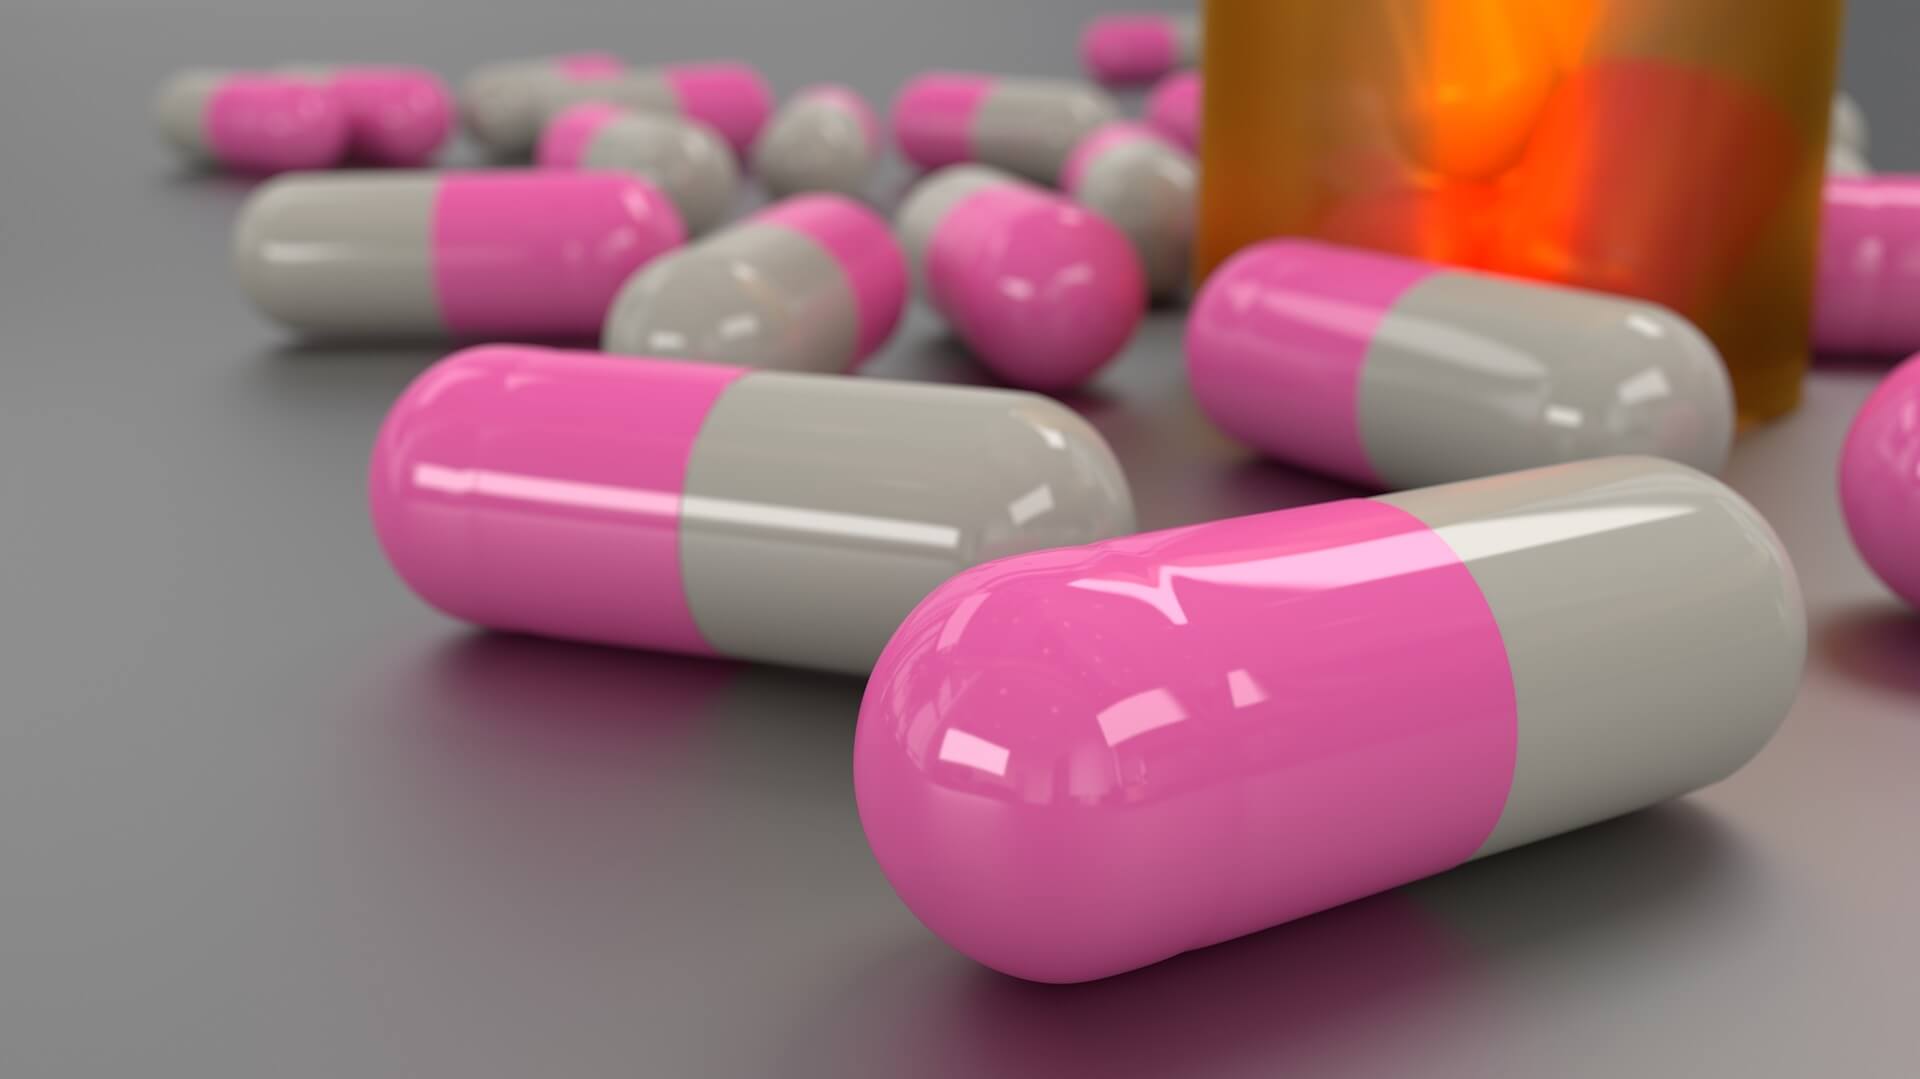 Prescription drug abuse leads to addiction